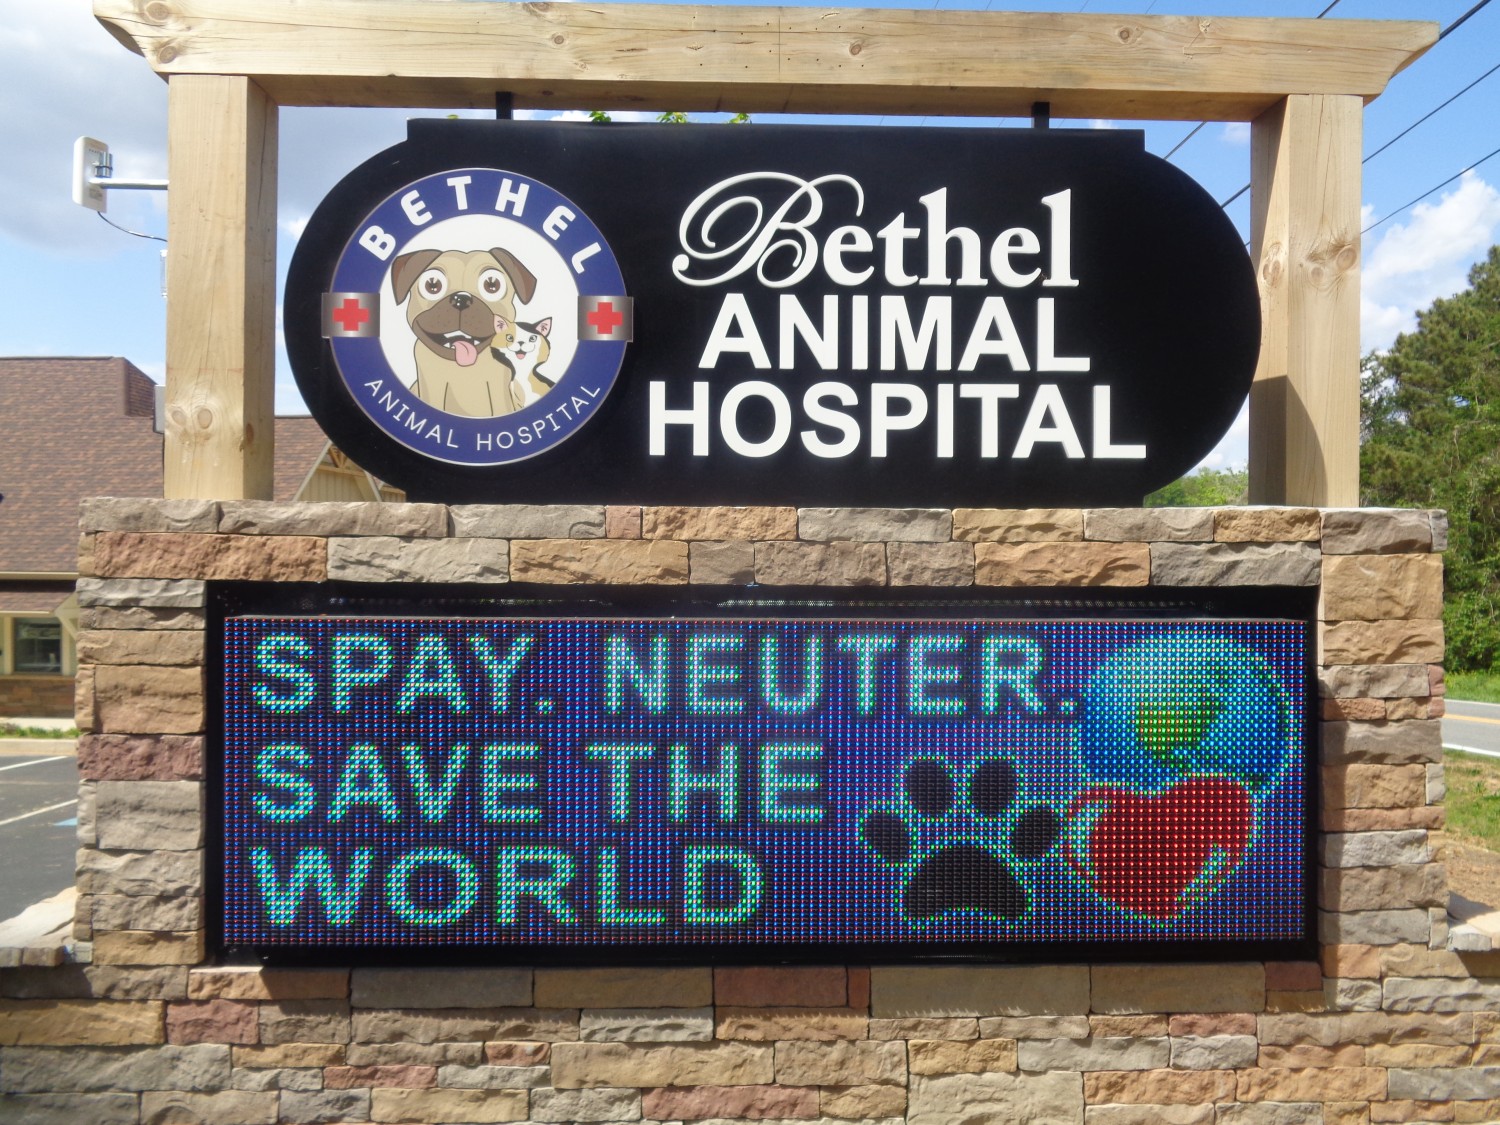 Bethel Animal Hospital hospital sign